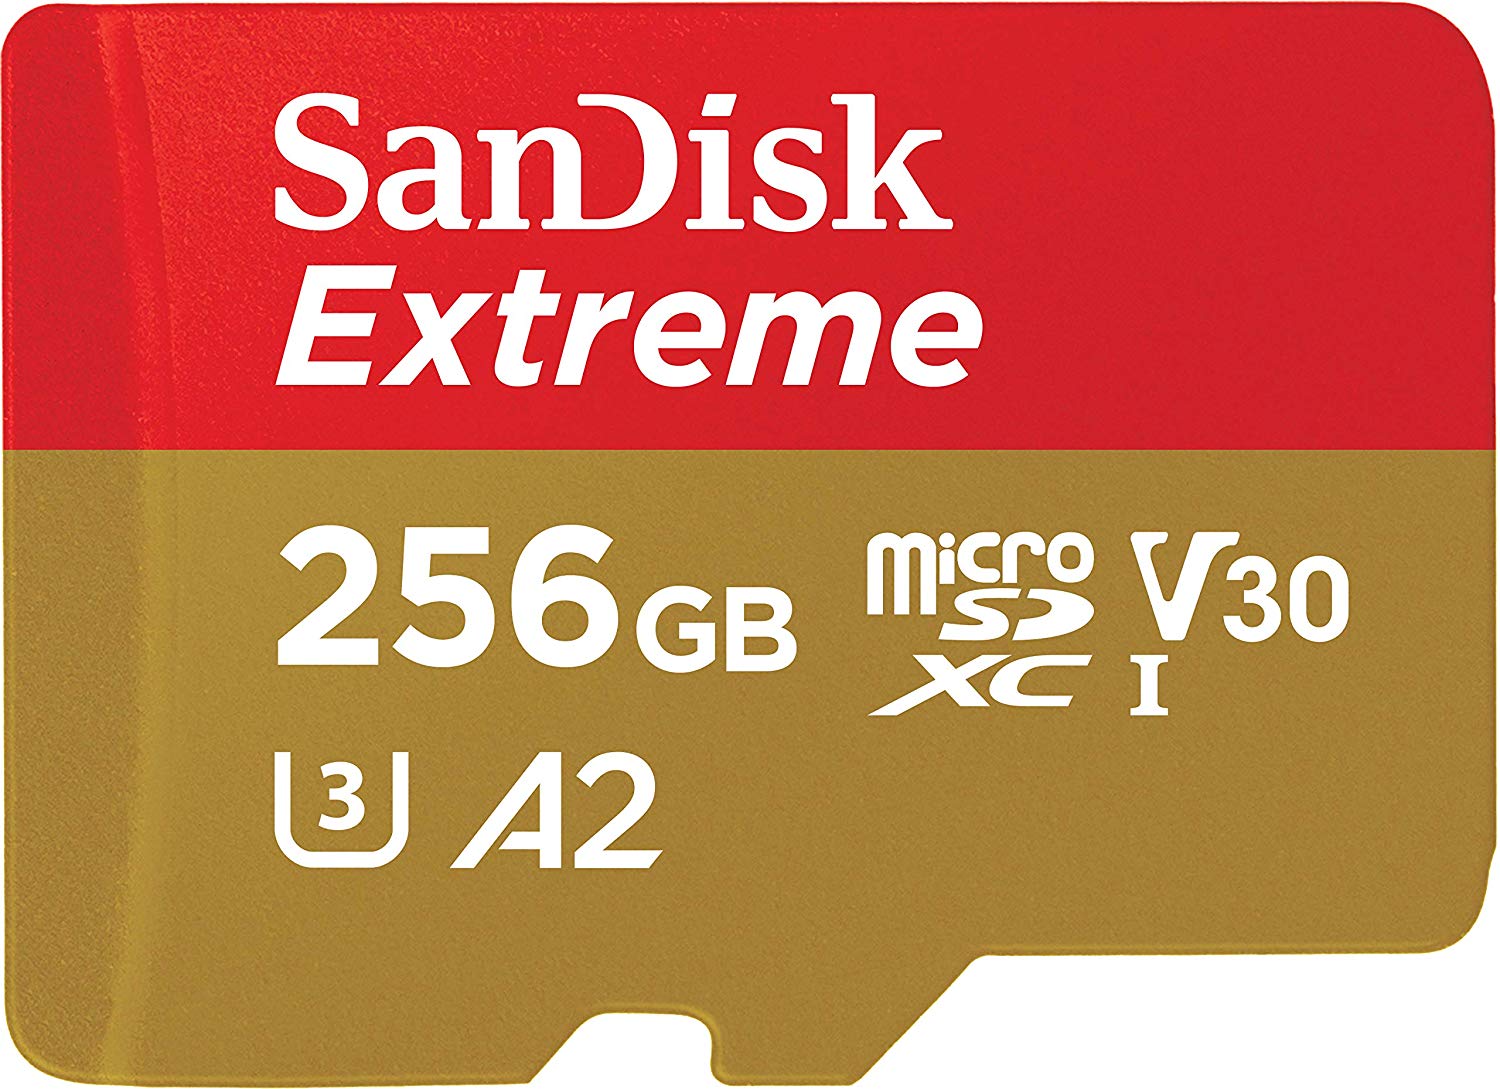 Sandisk microSD card